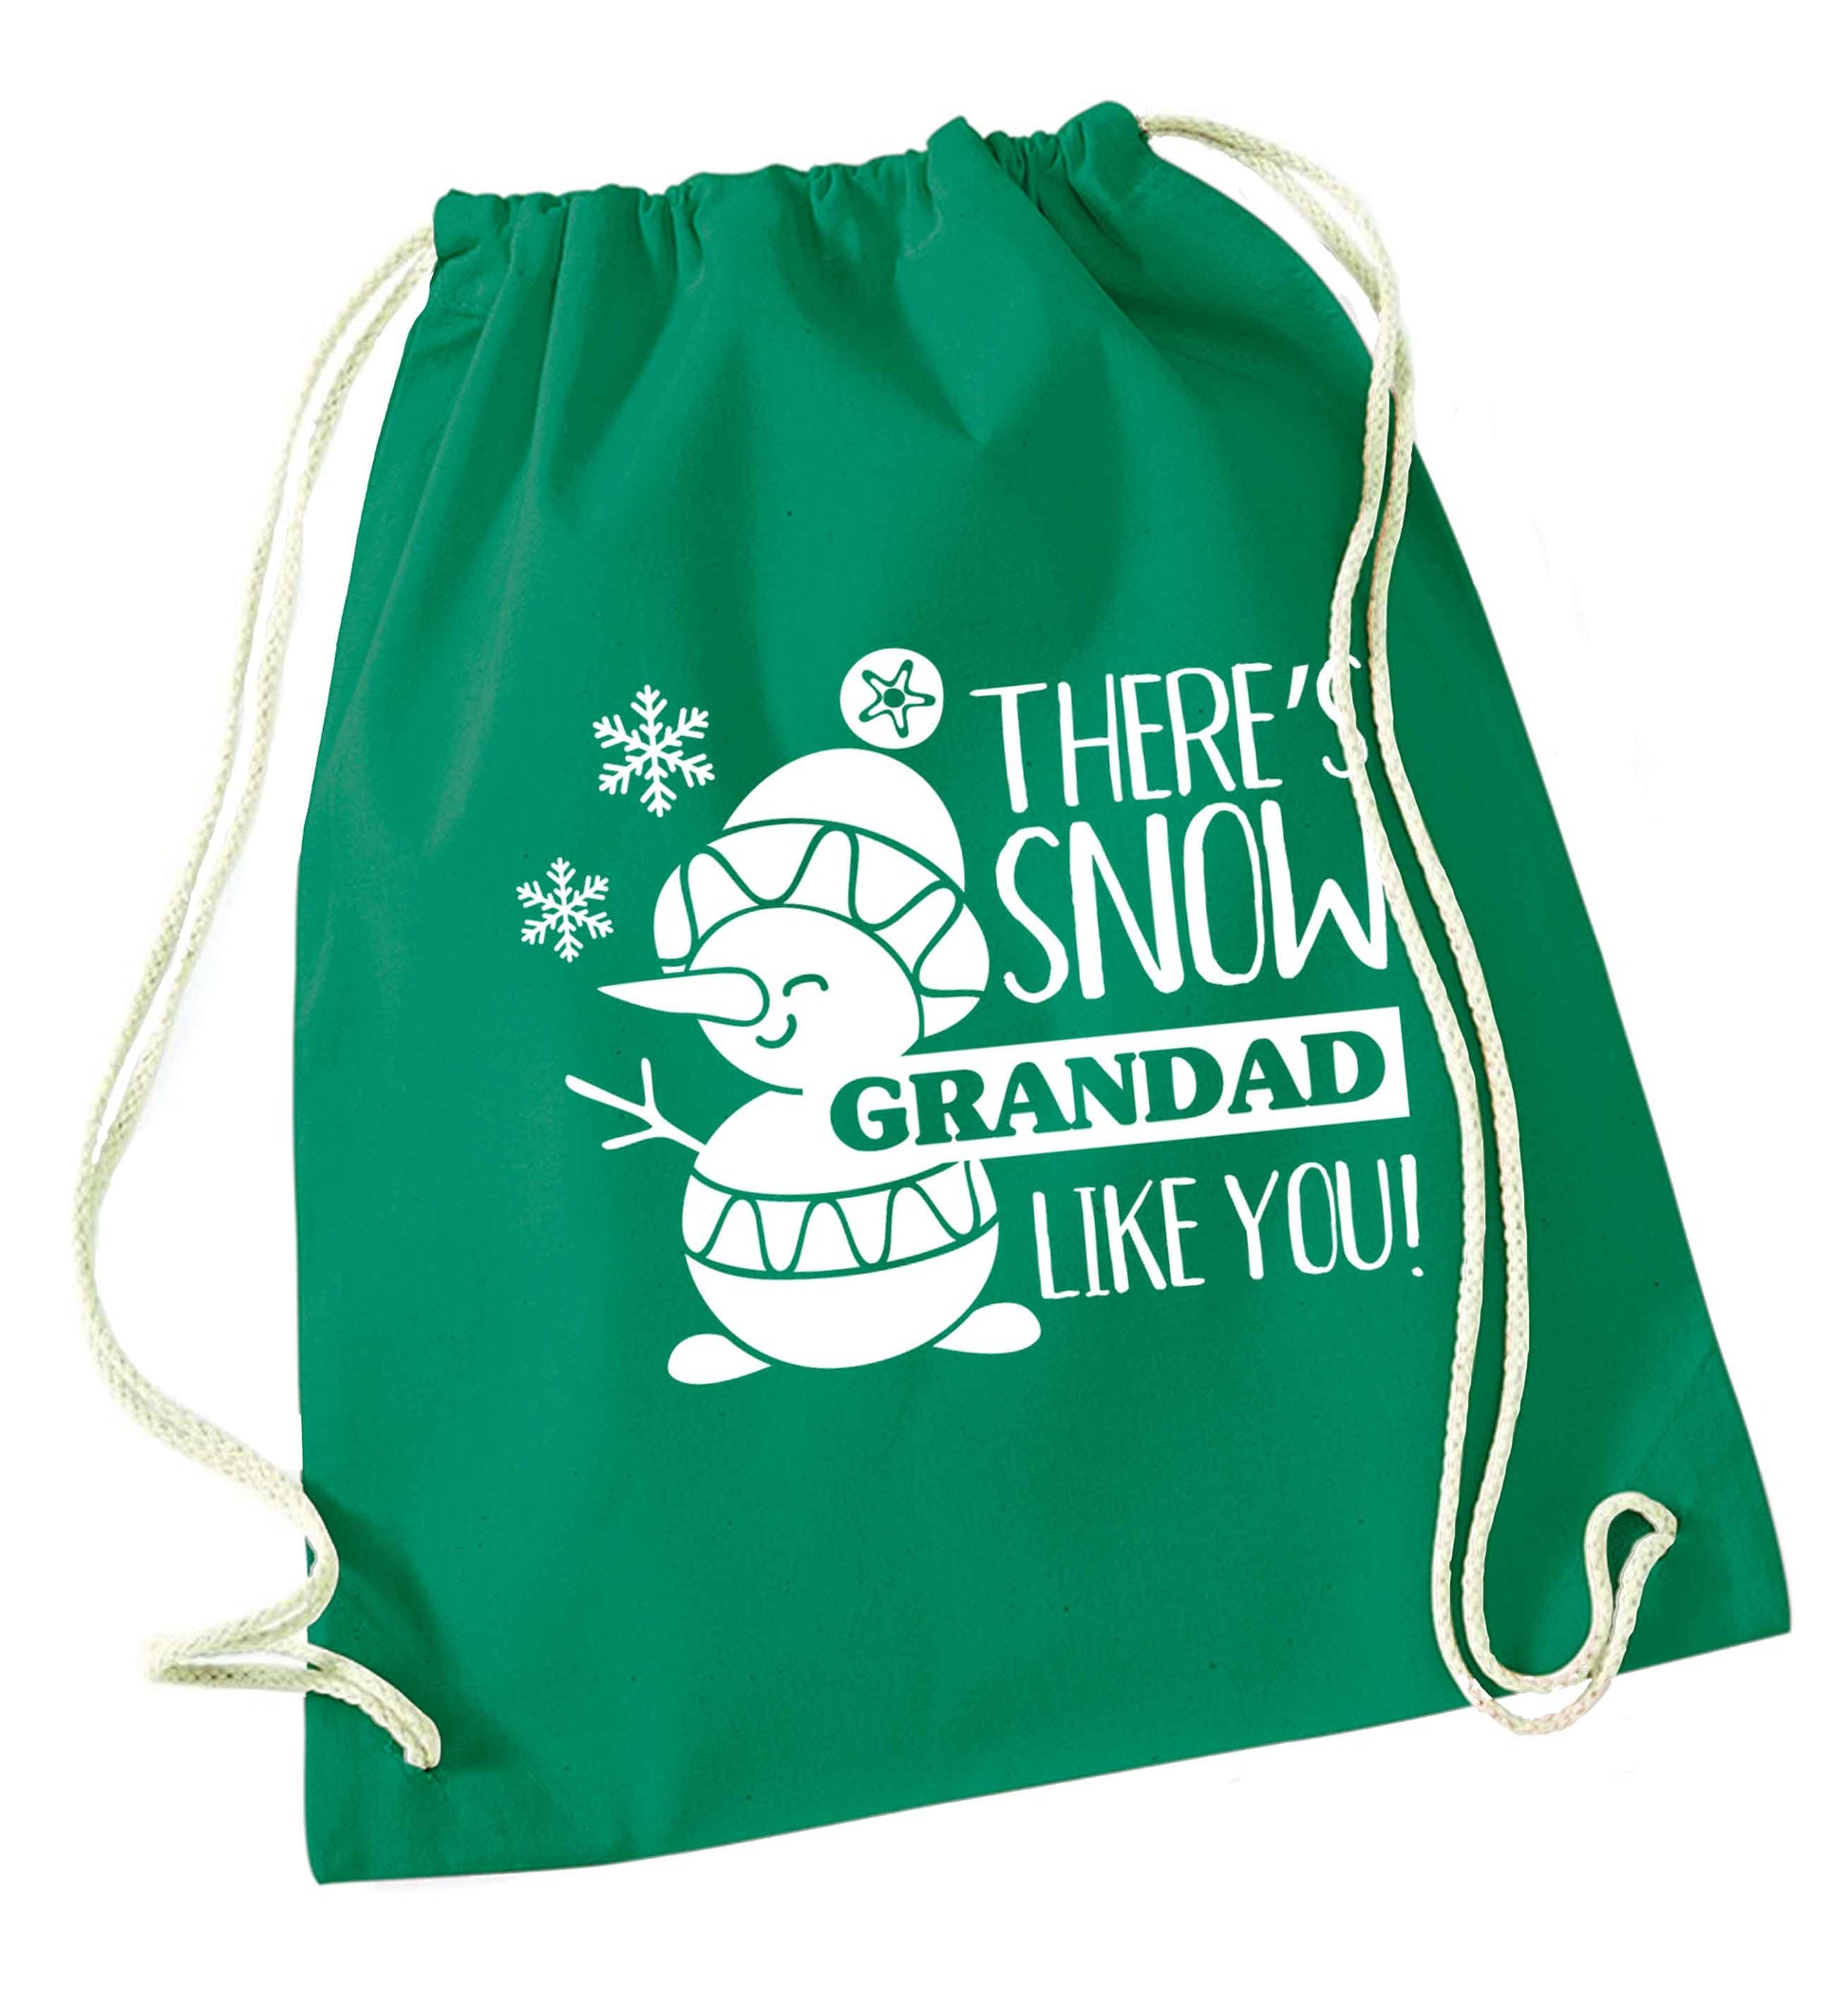 There's snow grandad like you green drawstring bag